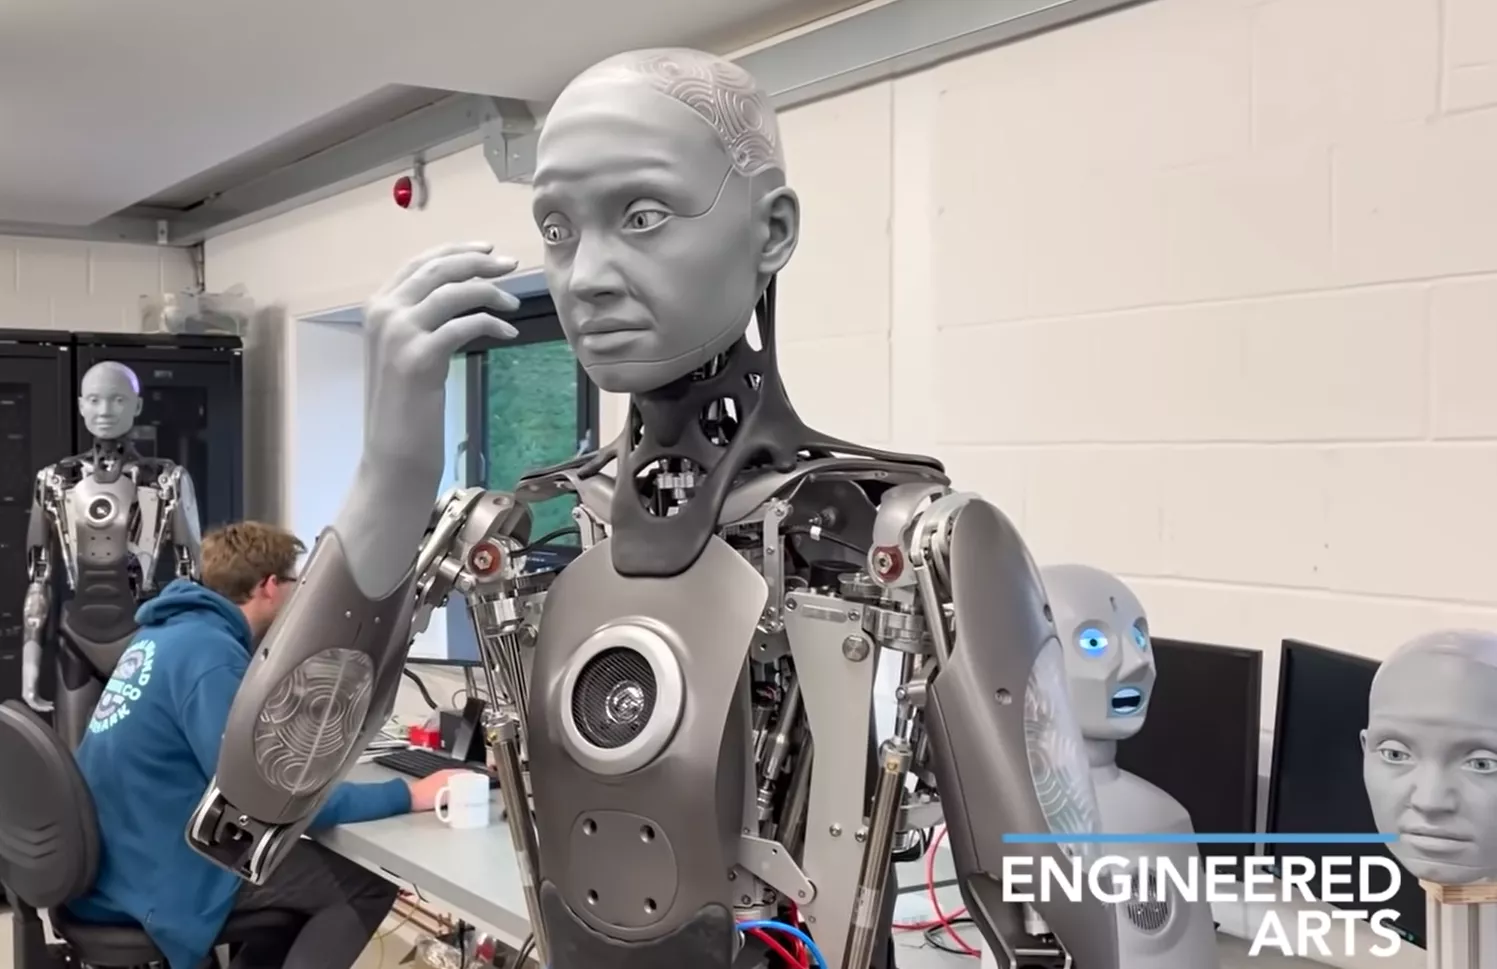 renderen toxiciteit Decoratief Video of Realistic Humanoid Robot Has the Internet Terrified: 'Oh My God'